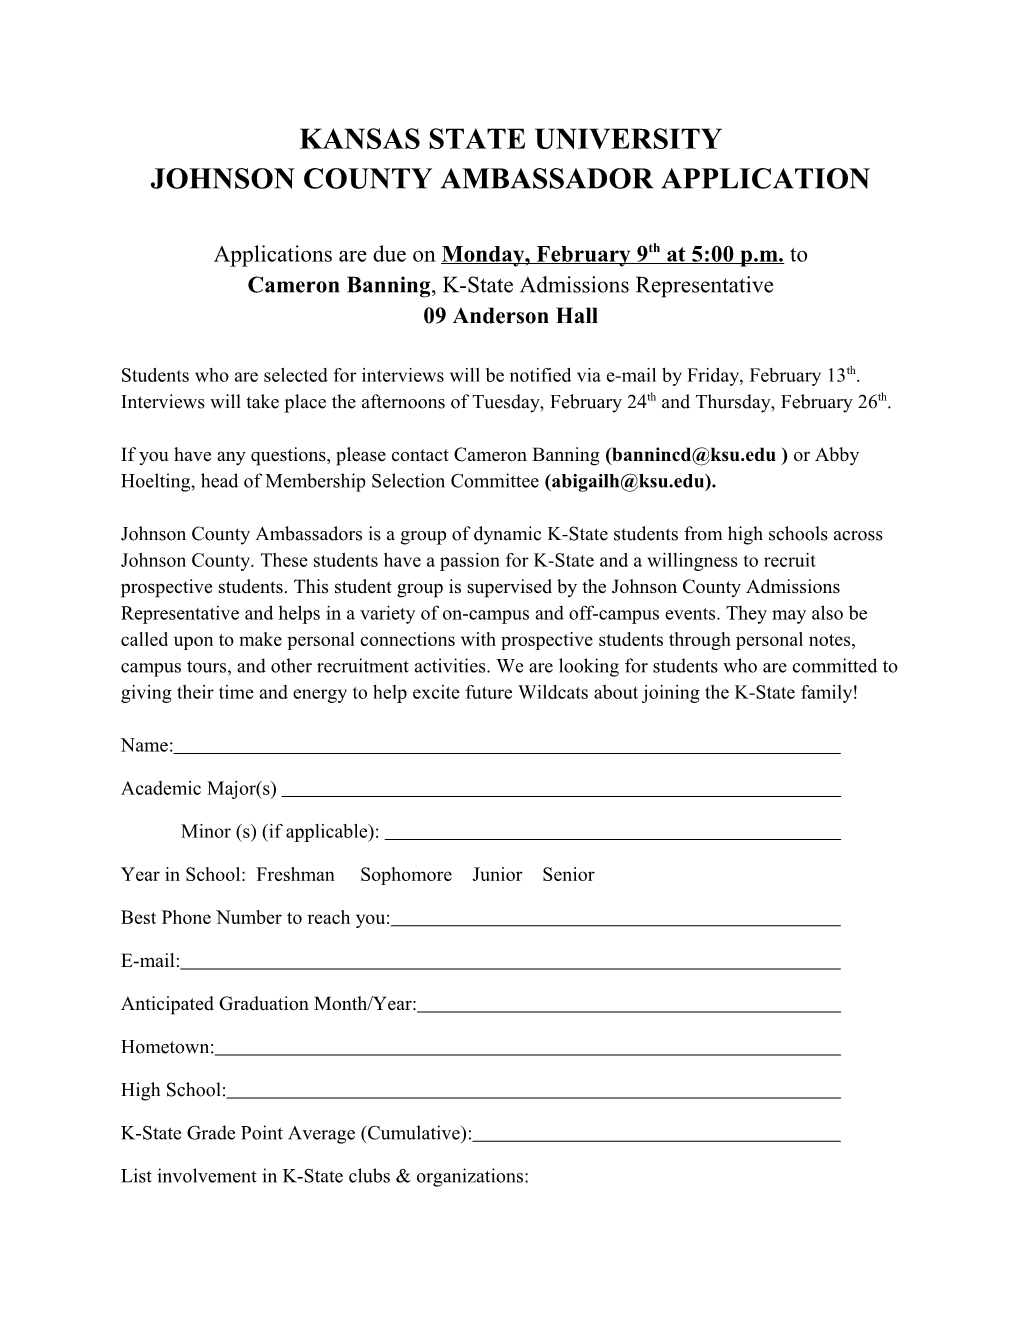 Johnson County Ambassador Application